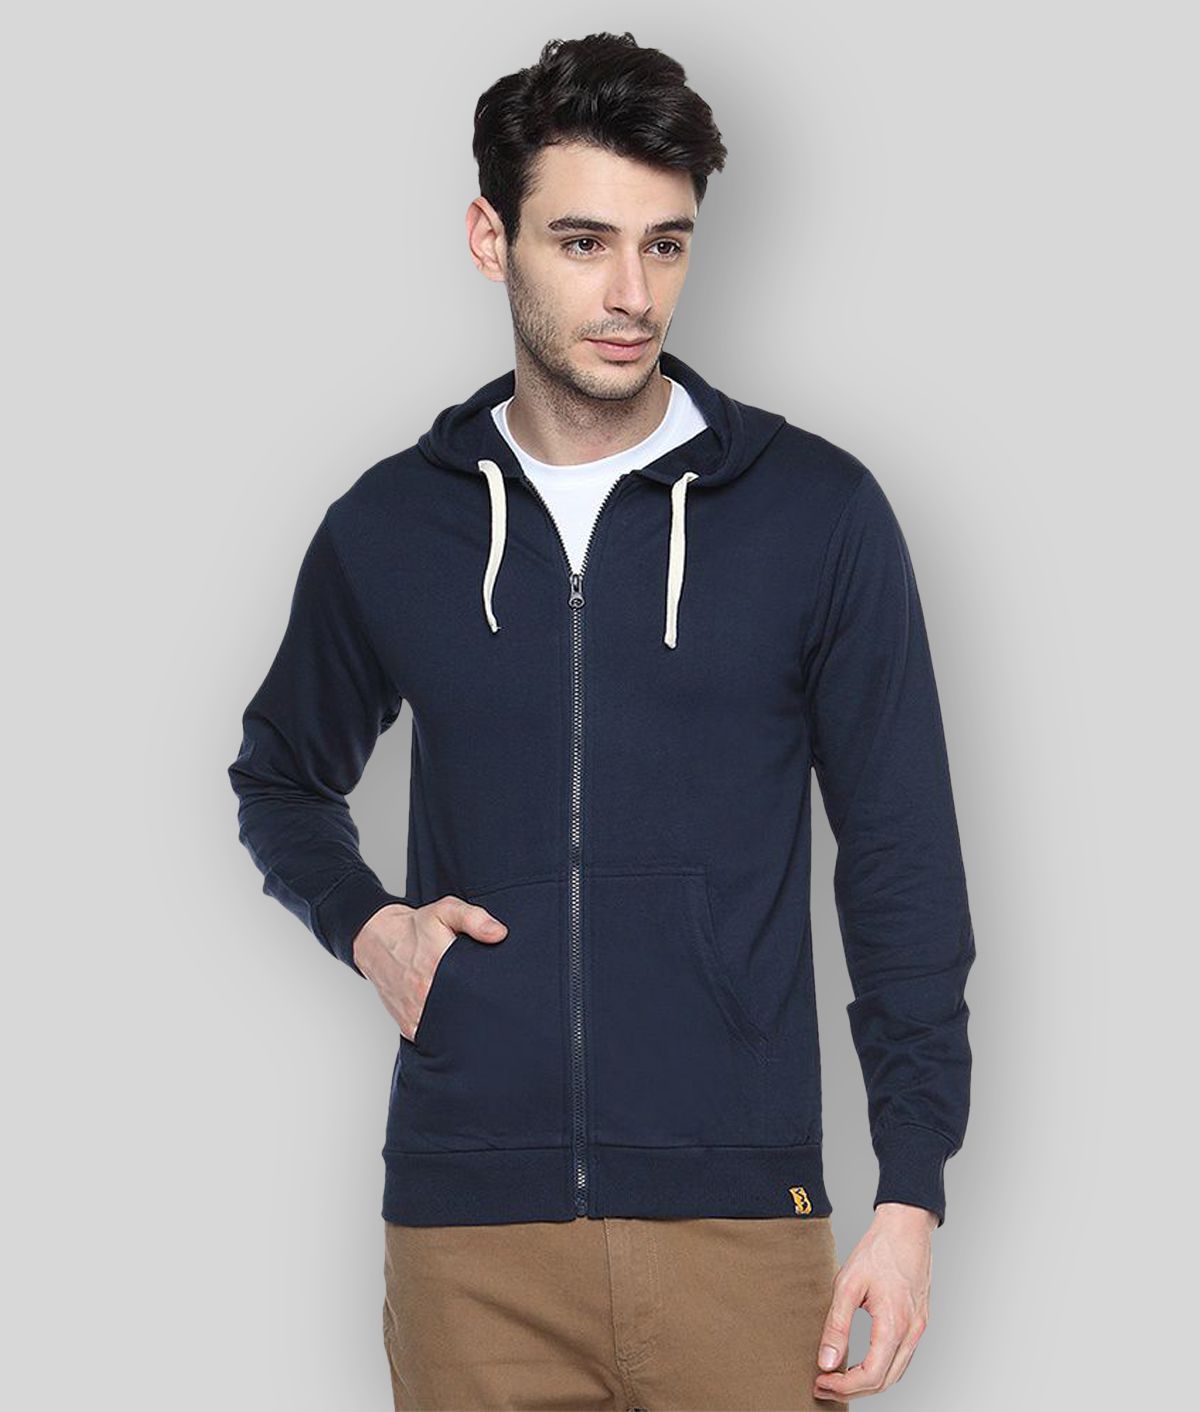     			Campus Sutra - Blue Cotton Regular Fit Men's Sweatshirt ( Pack of 1 )